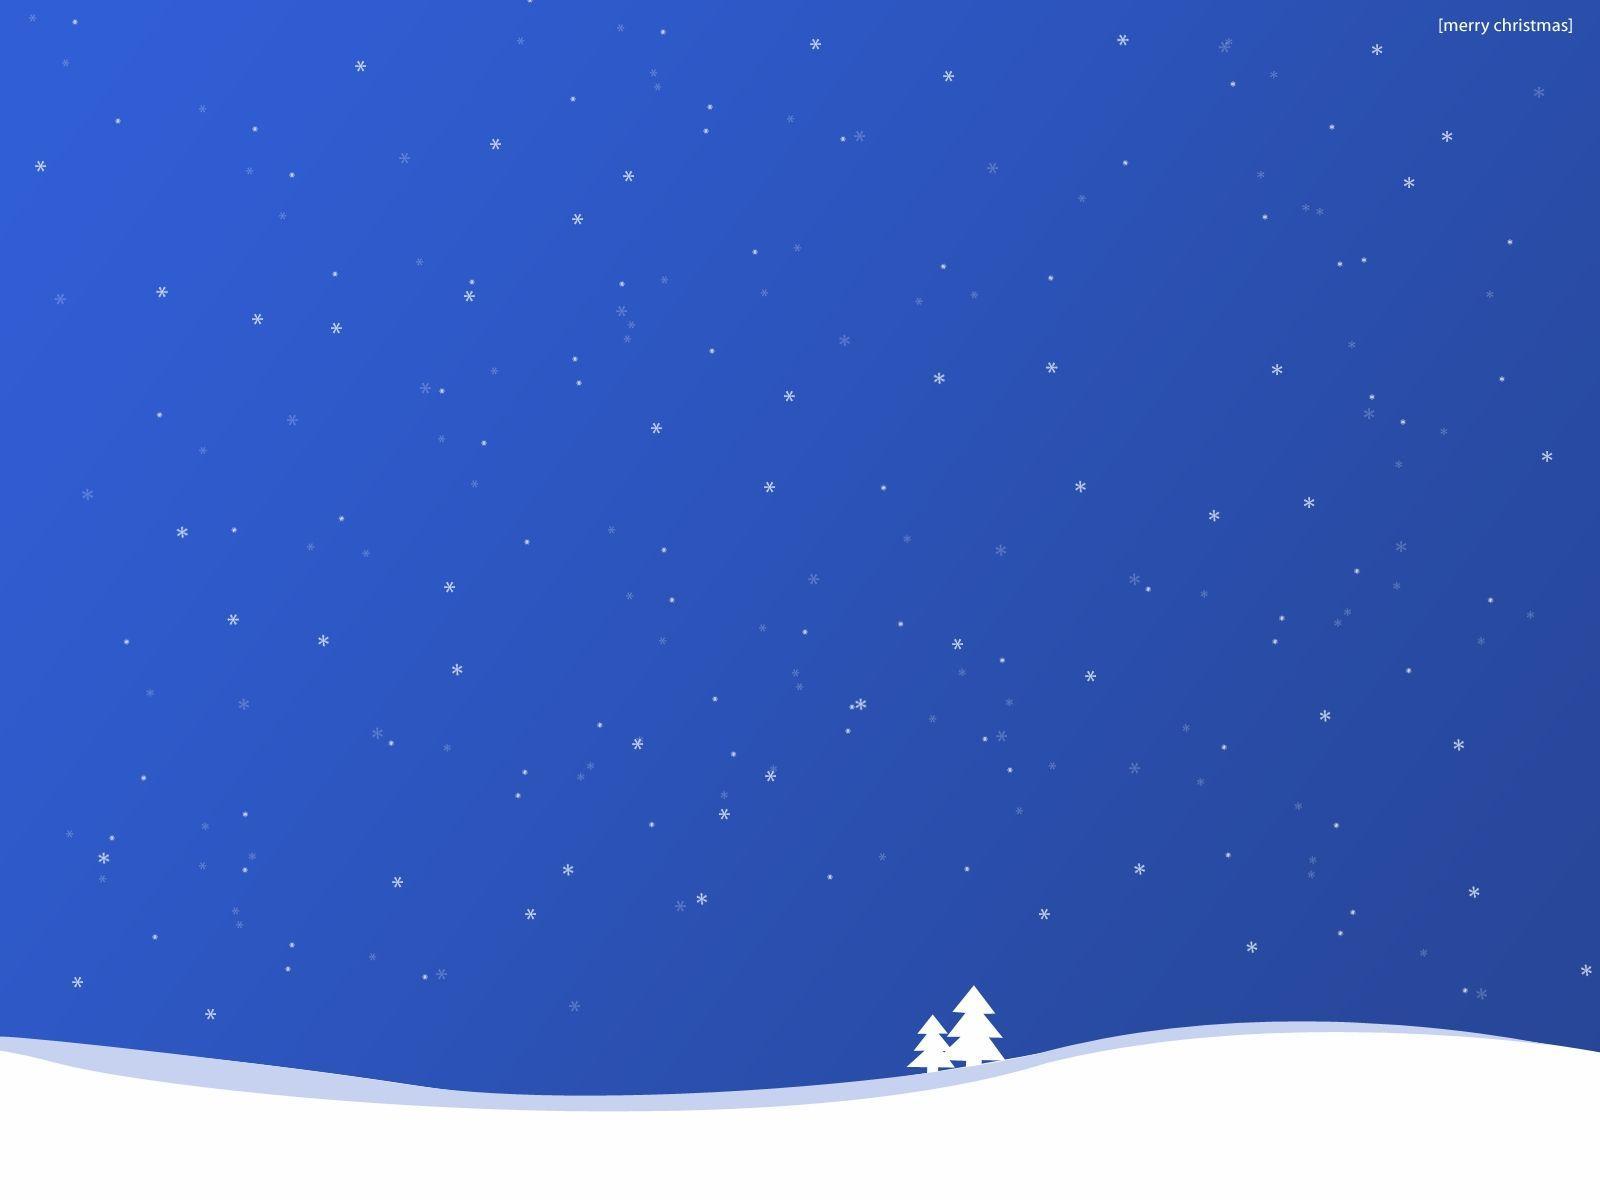 Free Snowy Christmas Desktop Wallpaper